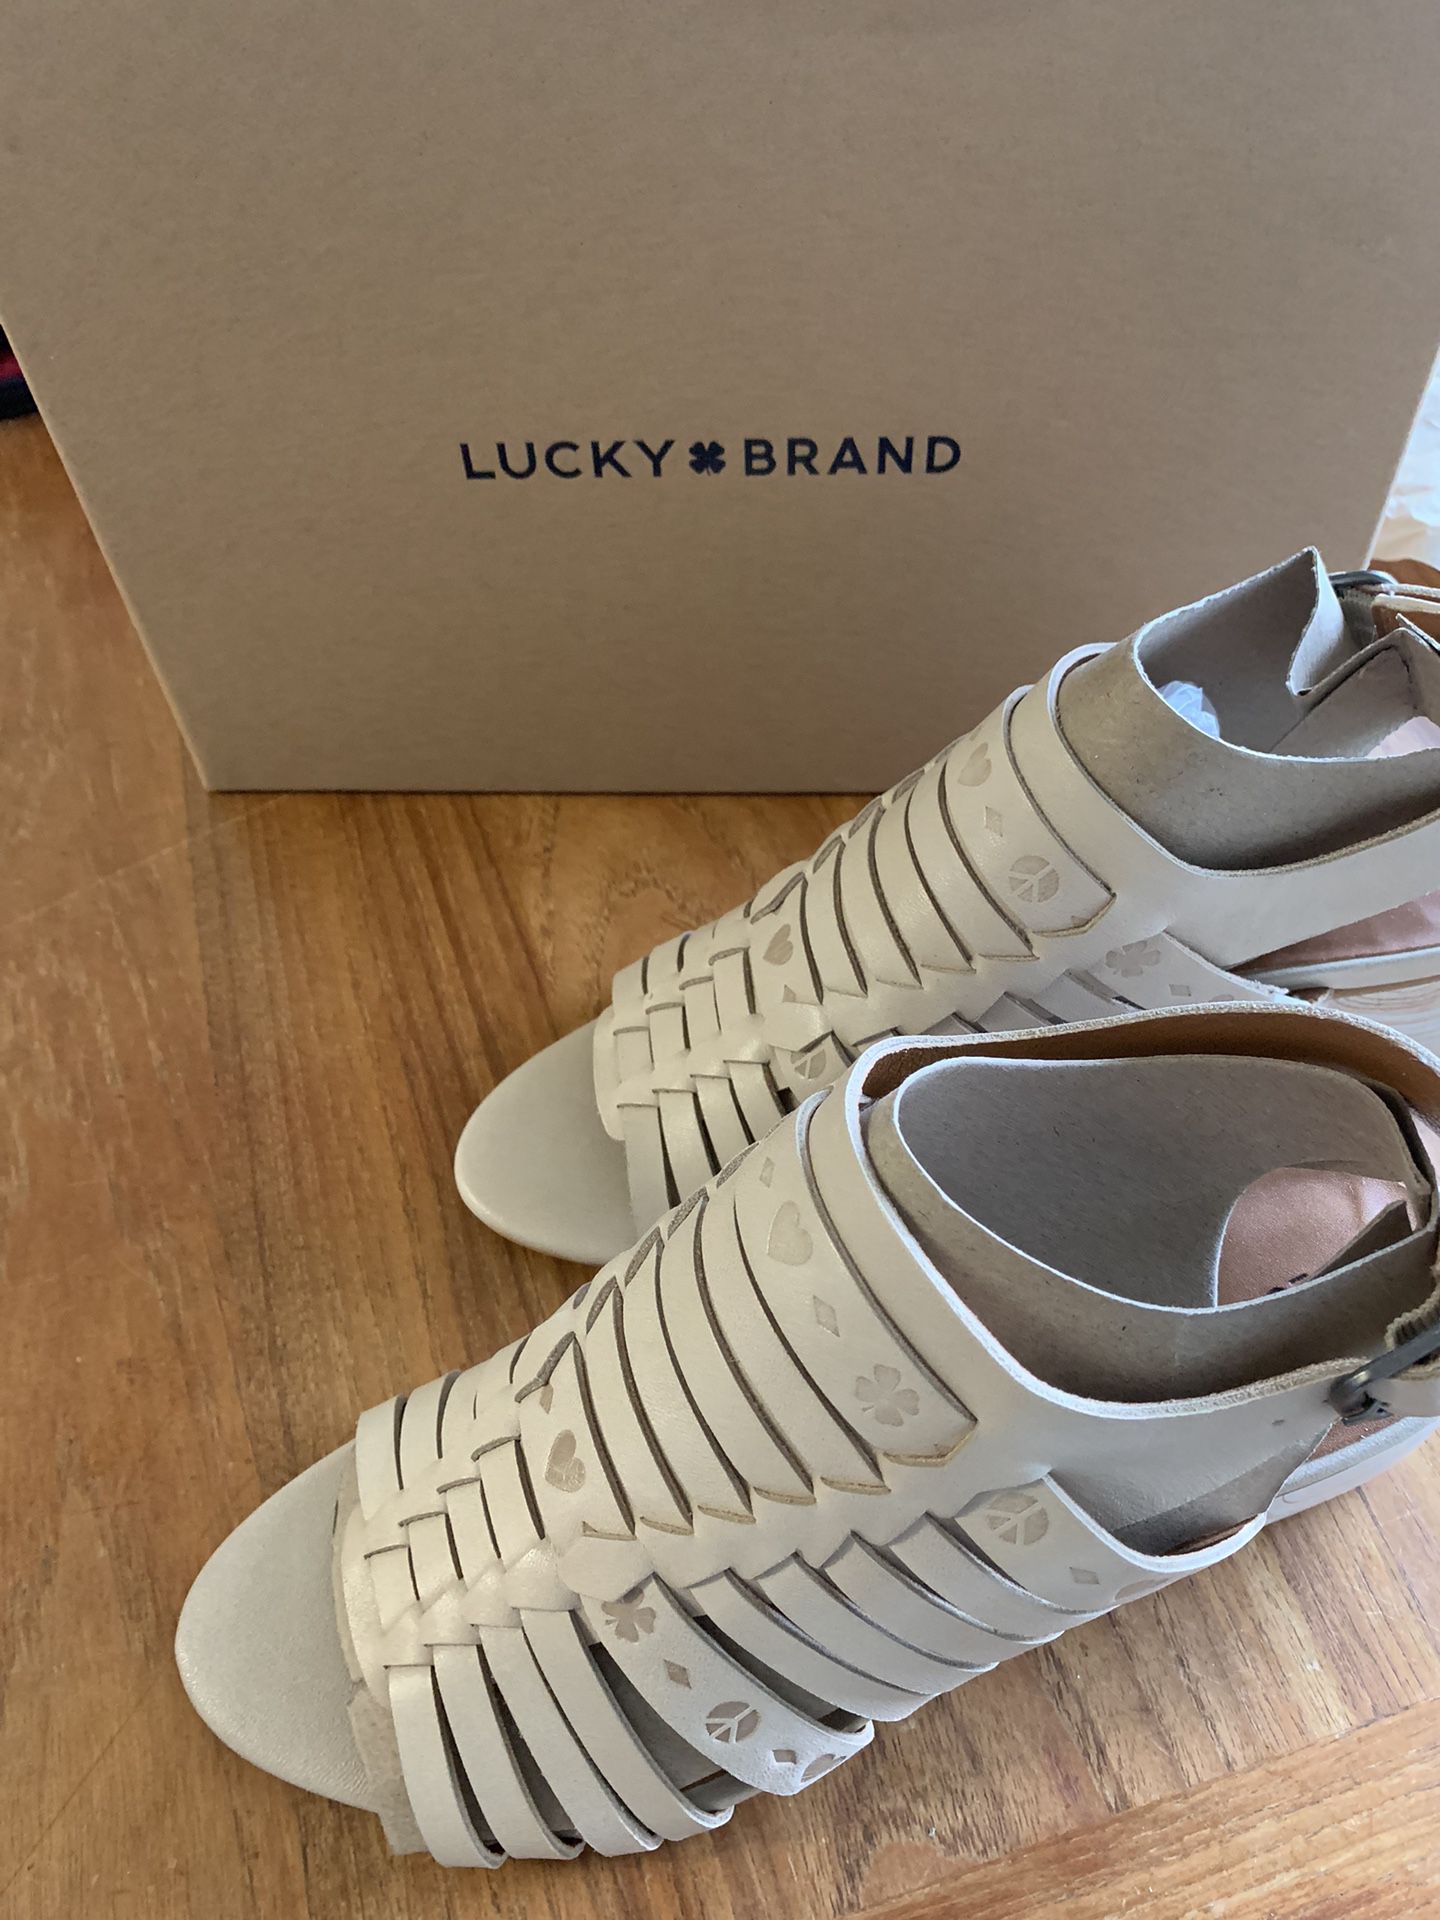 Brand New Lucky Sandal Heels 7 1/2